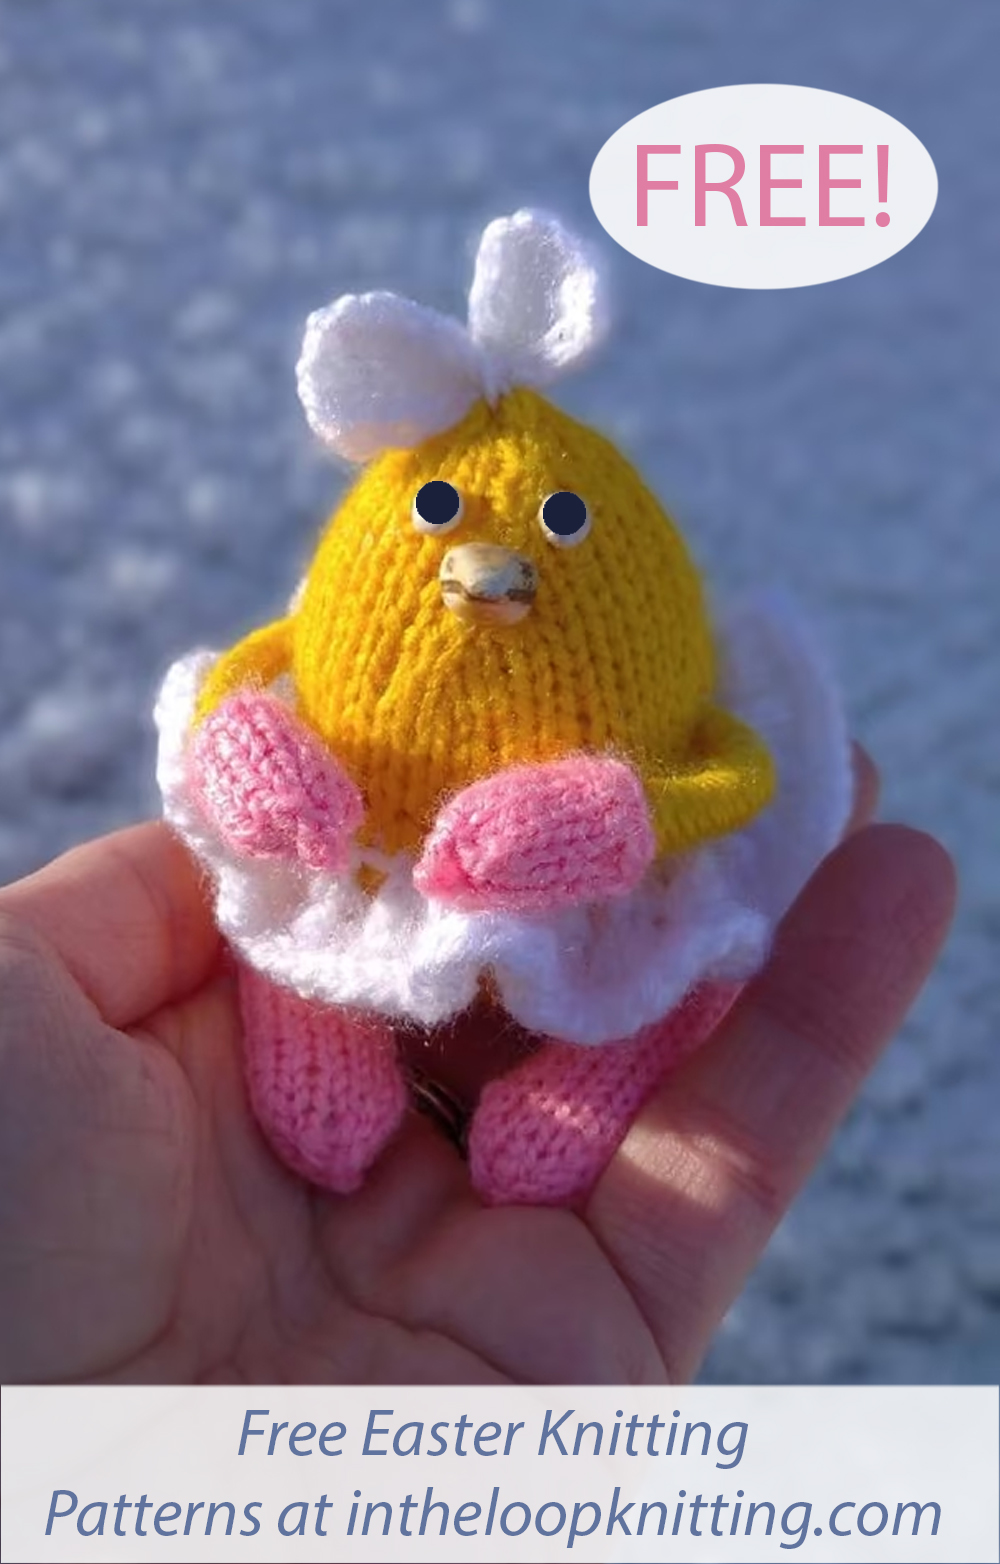 Free Easter Chick Knitting Pattern